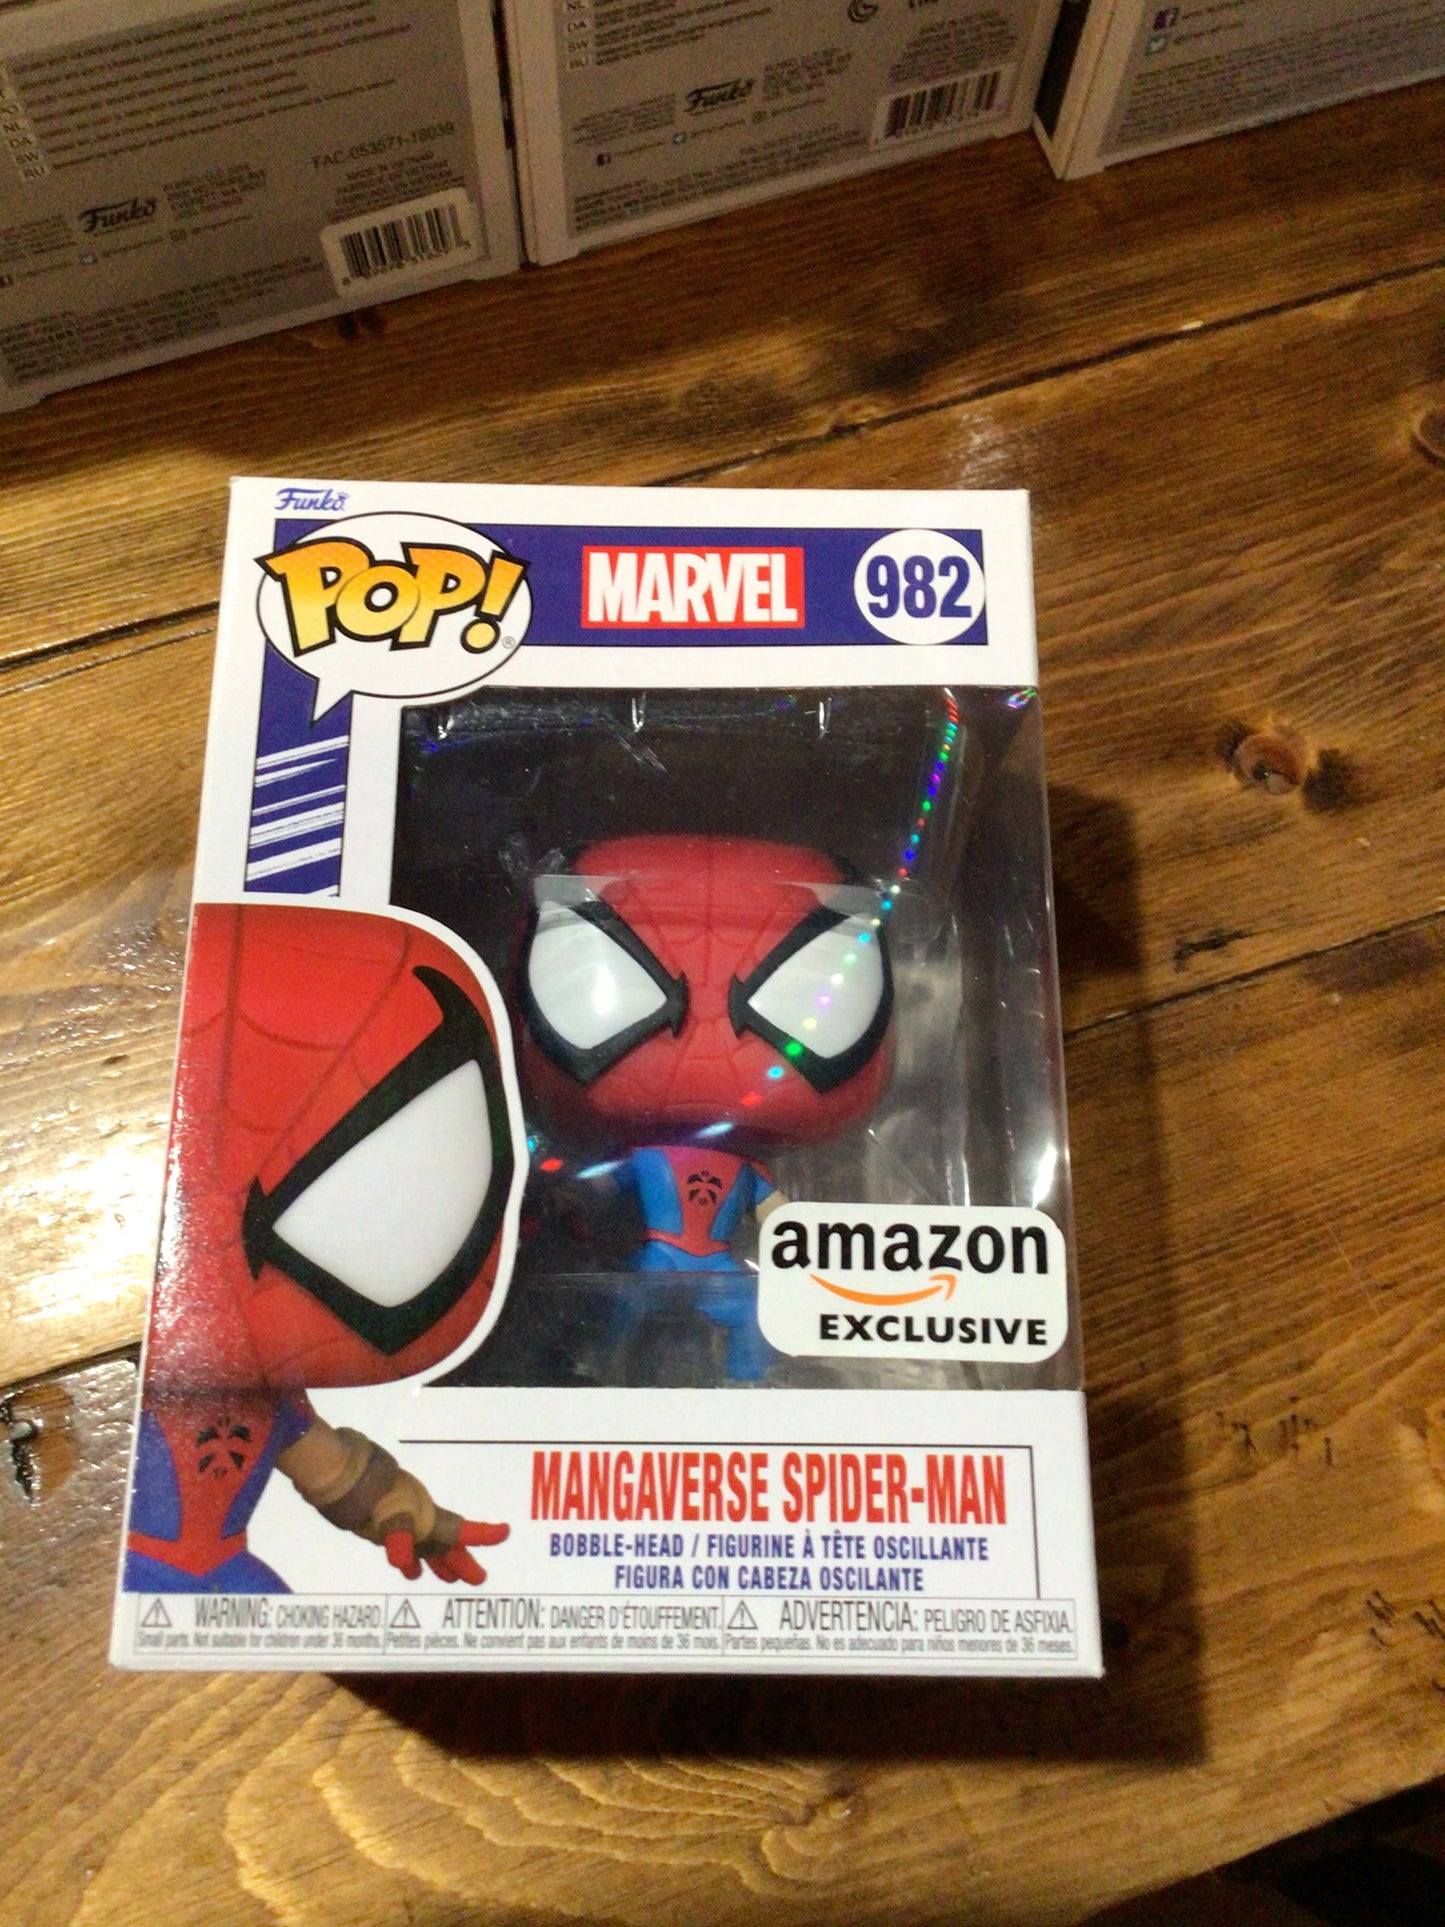 Mangaverse Spider-Man #982 Amazon Exclusive Funko Pop! Vinyl figure marvel